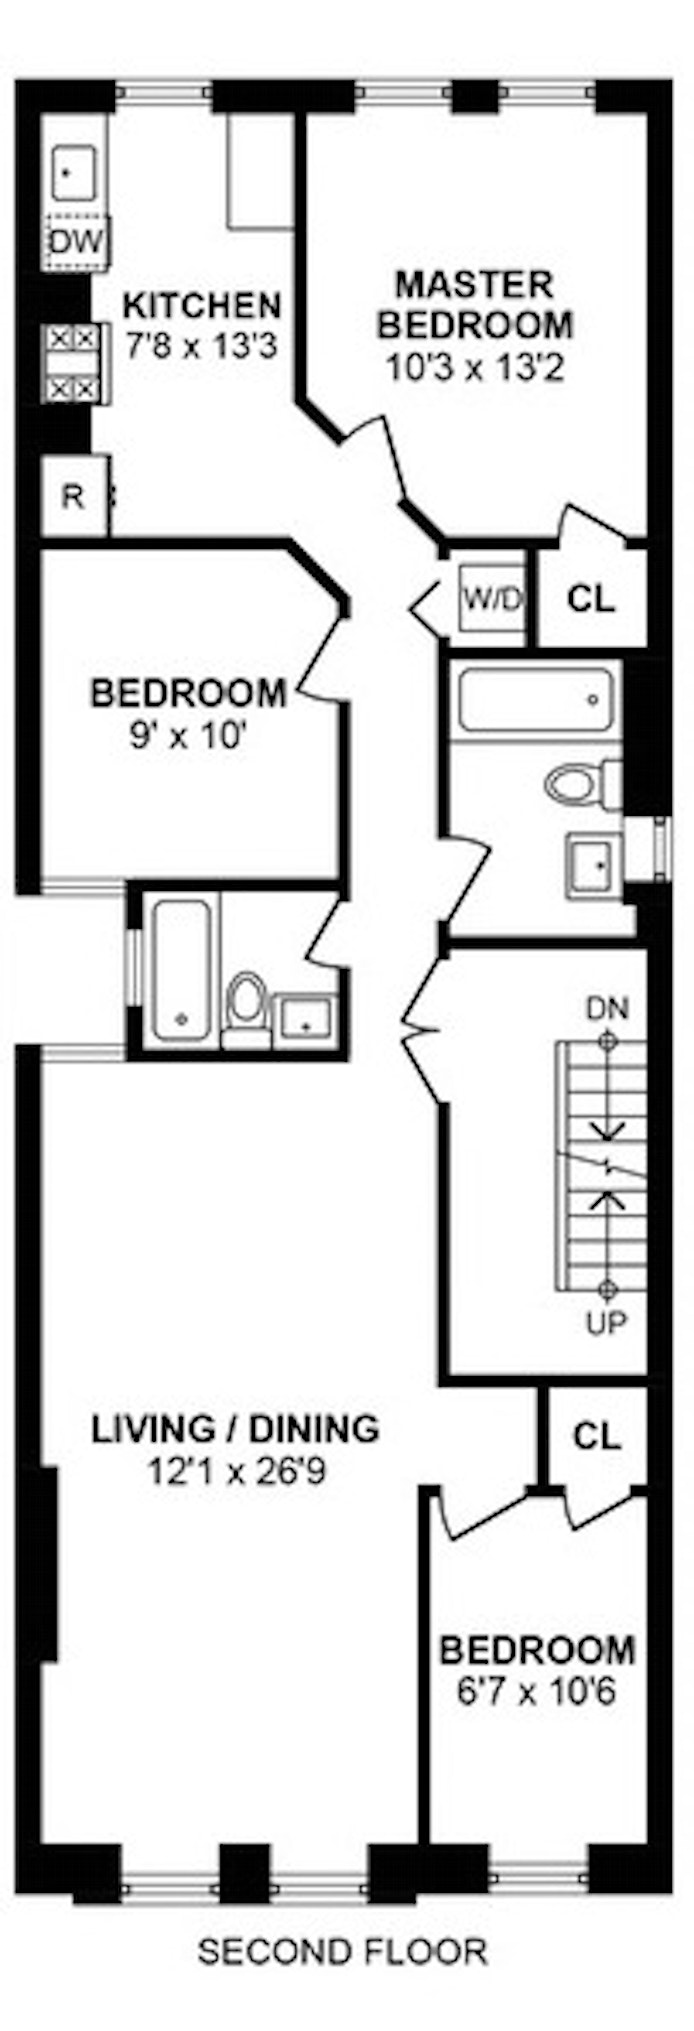 Floorplan for 211A 9th Street